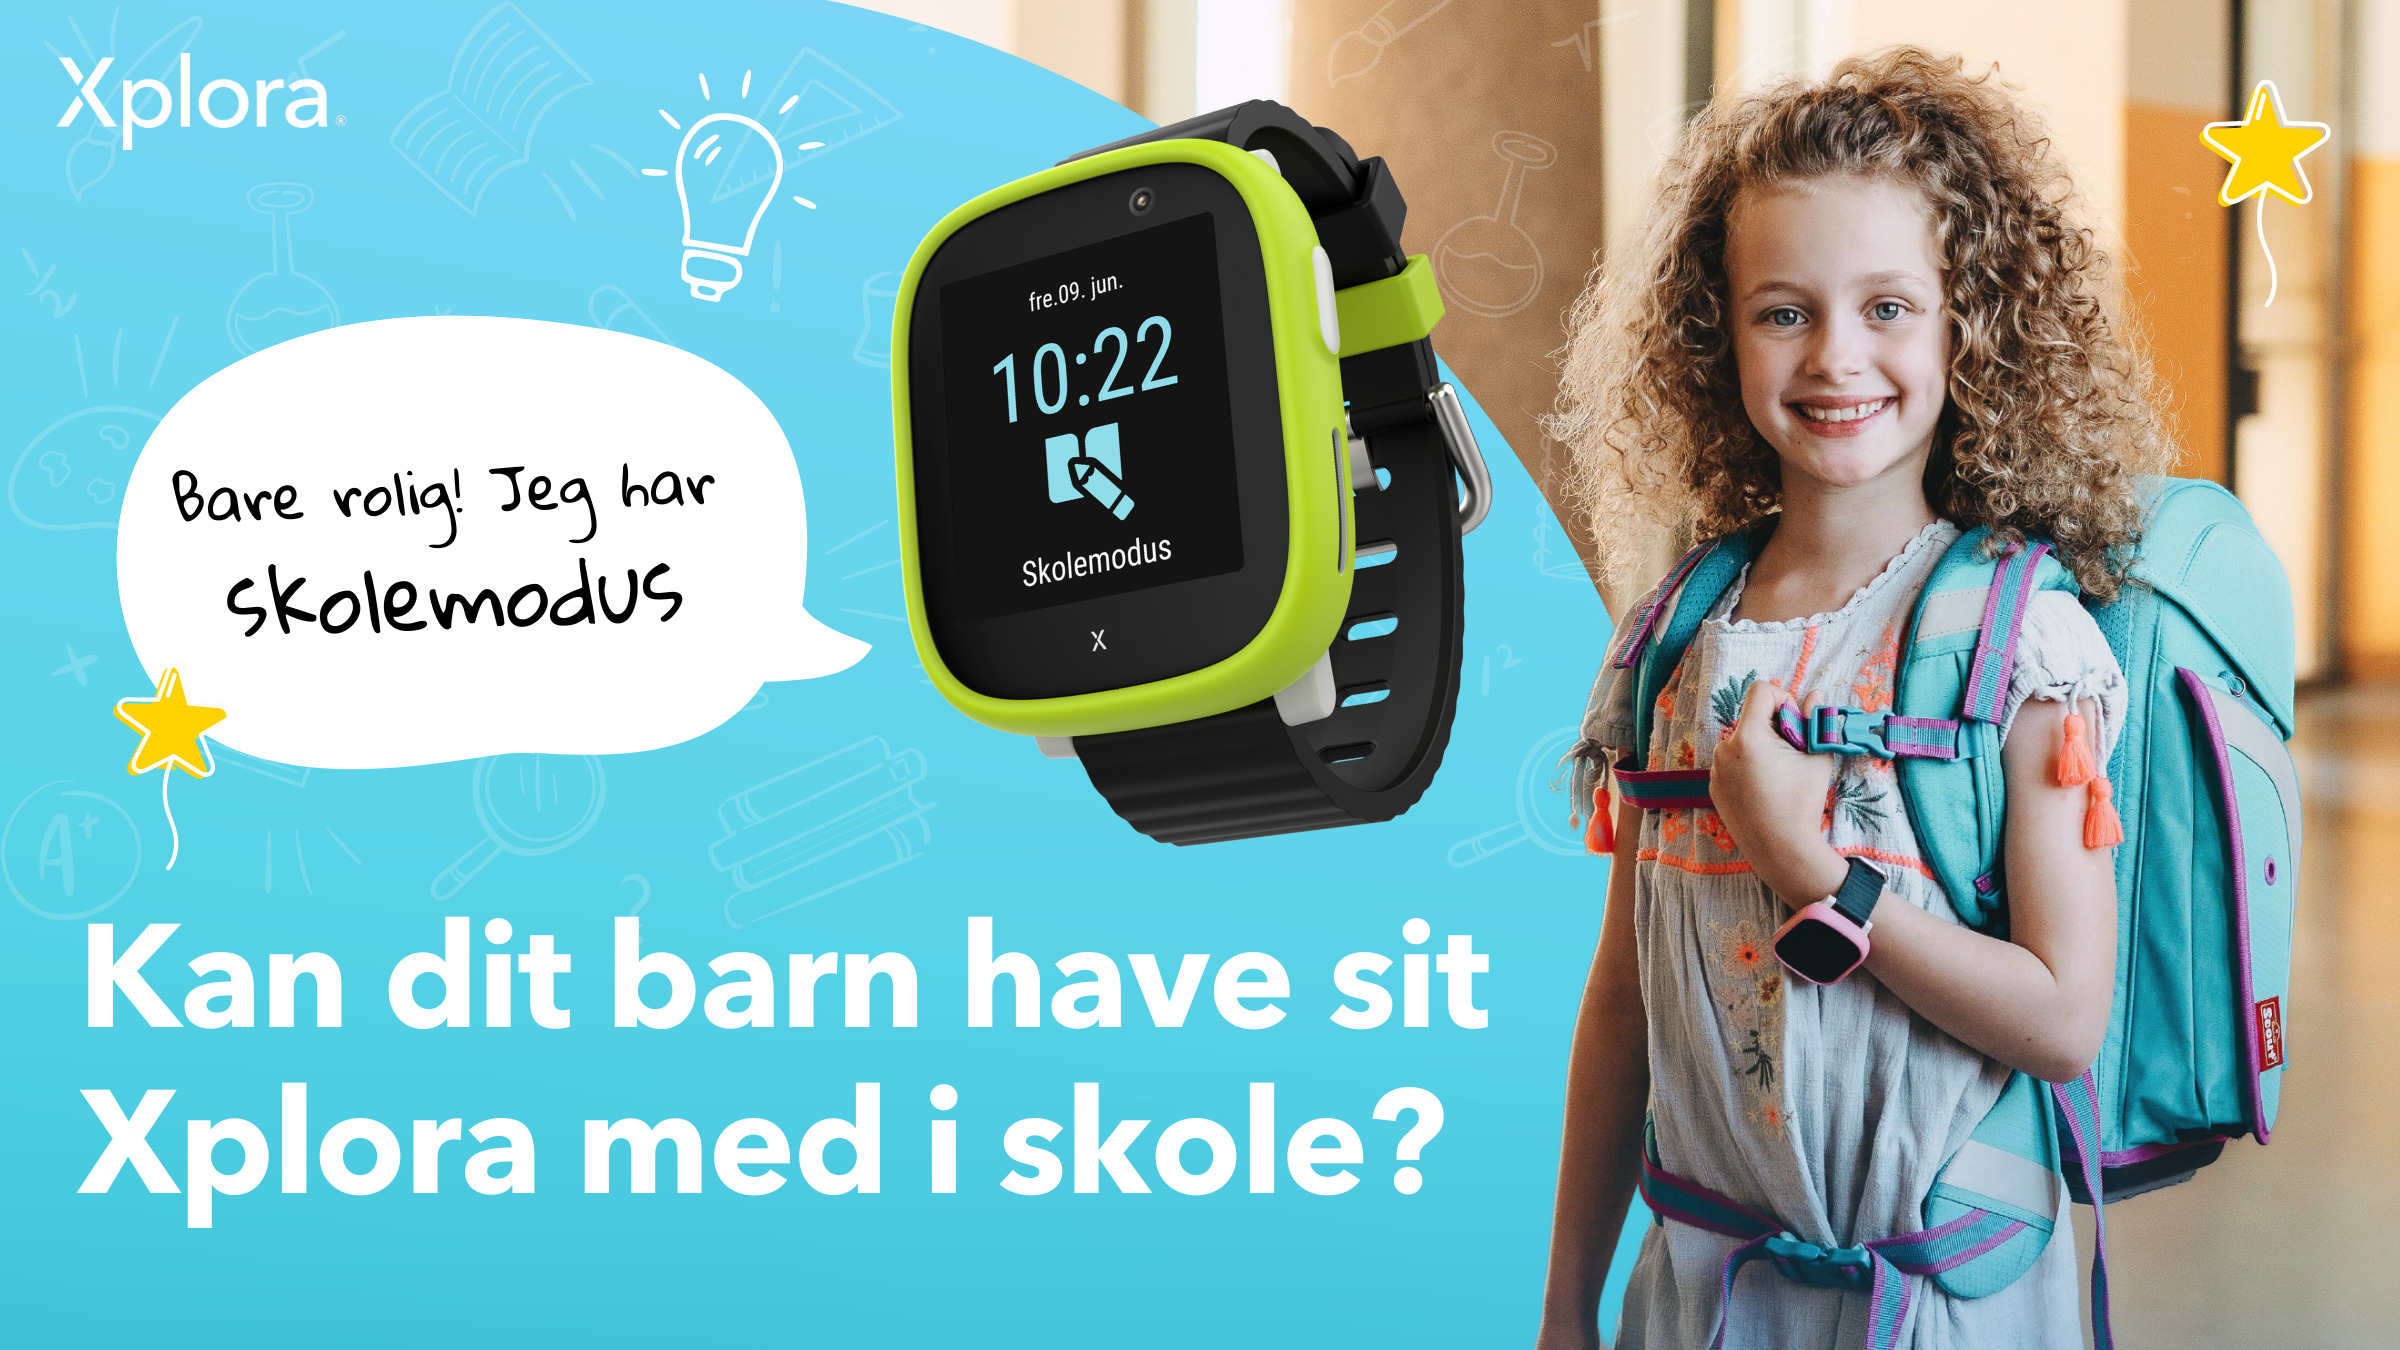 Xplora Kan dit barn have sit Xplora smartwatch med i skole